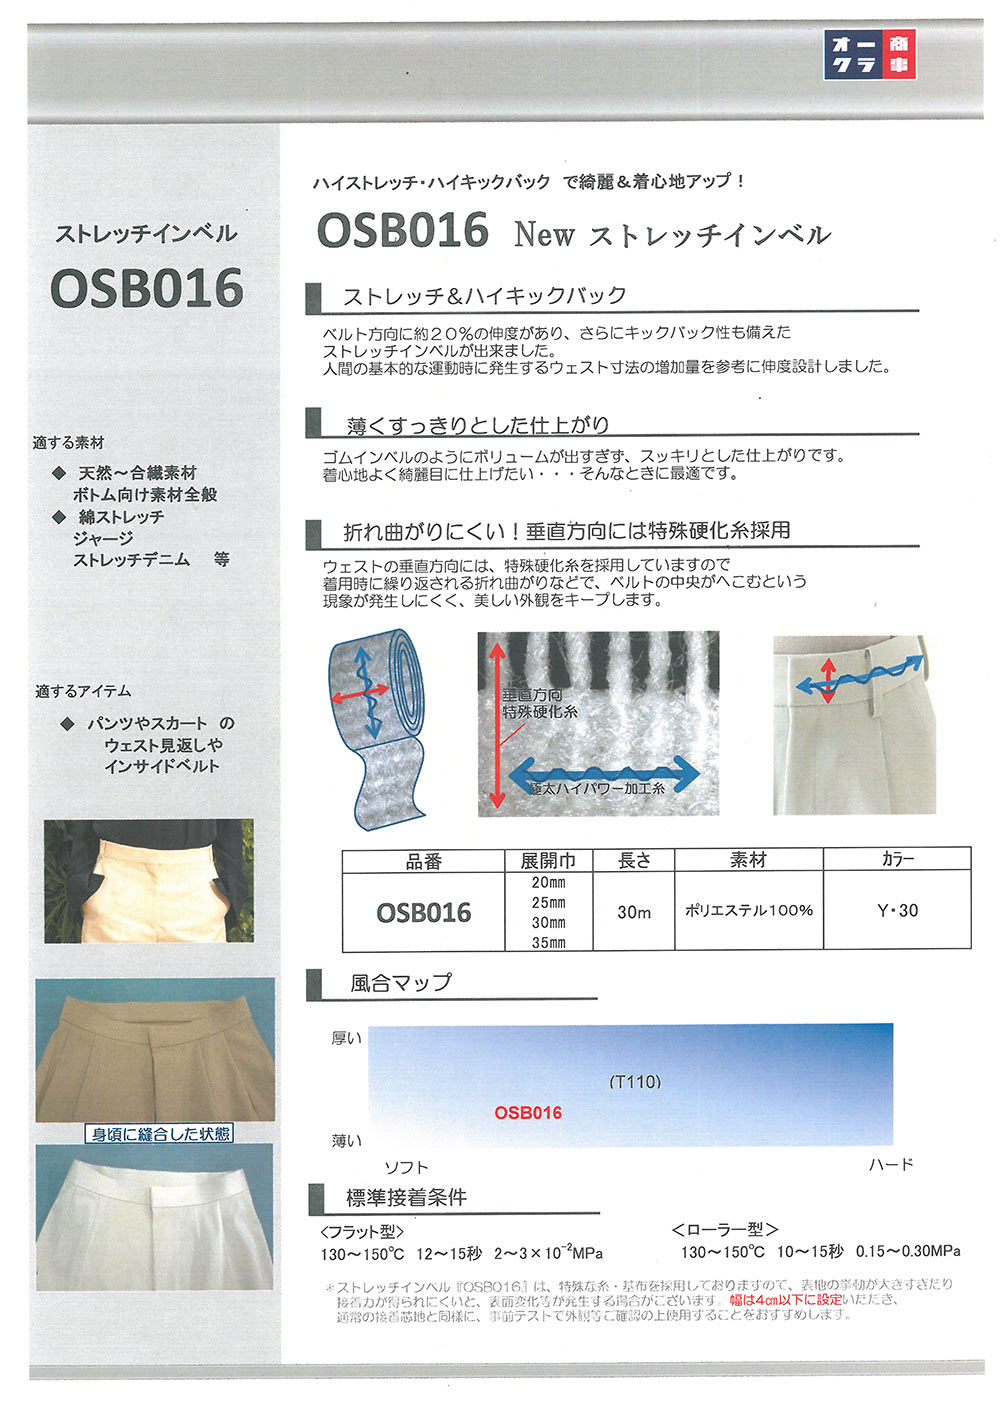 OSB016 Entoilage Thermocollant Stretch Invel [sortie] Nittobo